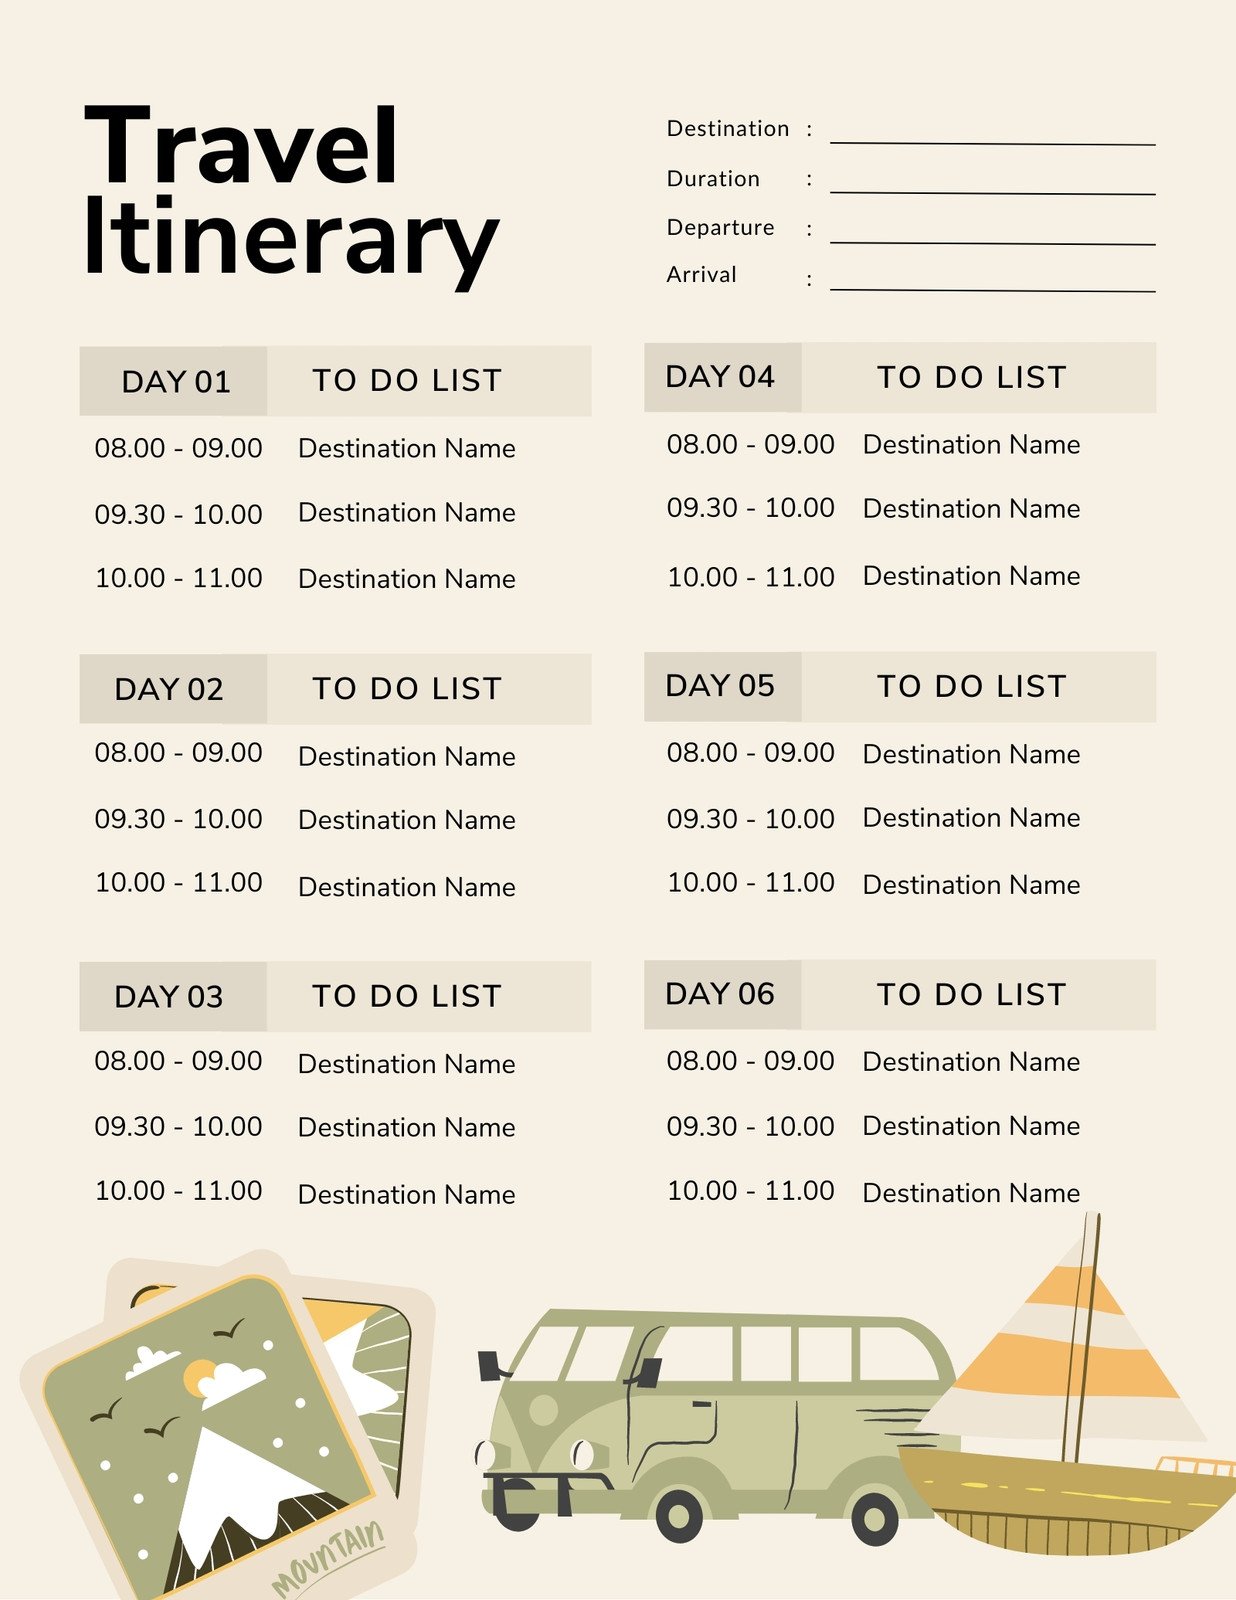 Sample travel itineraries